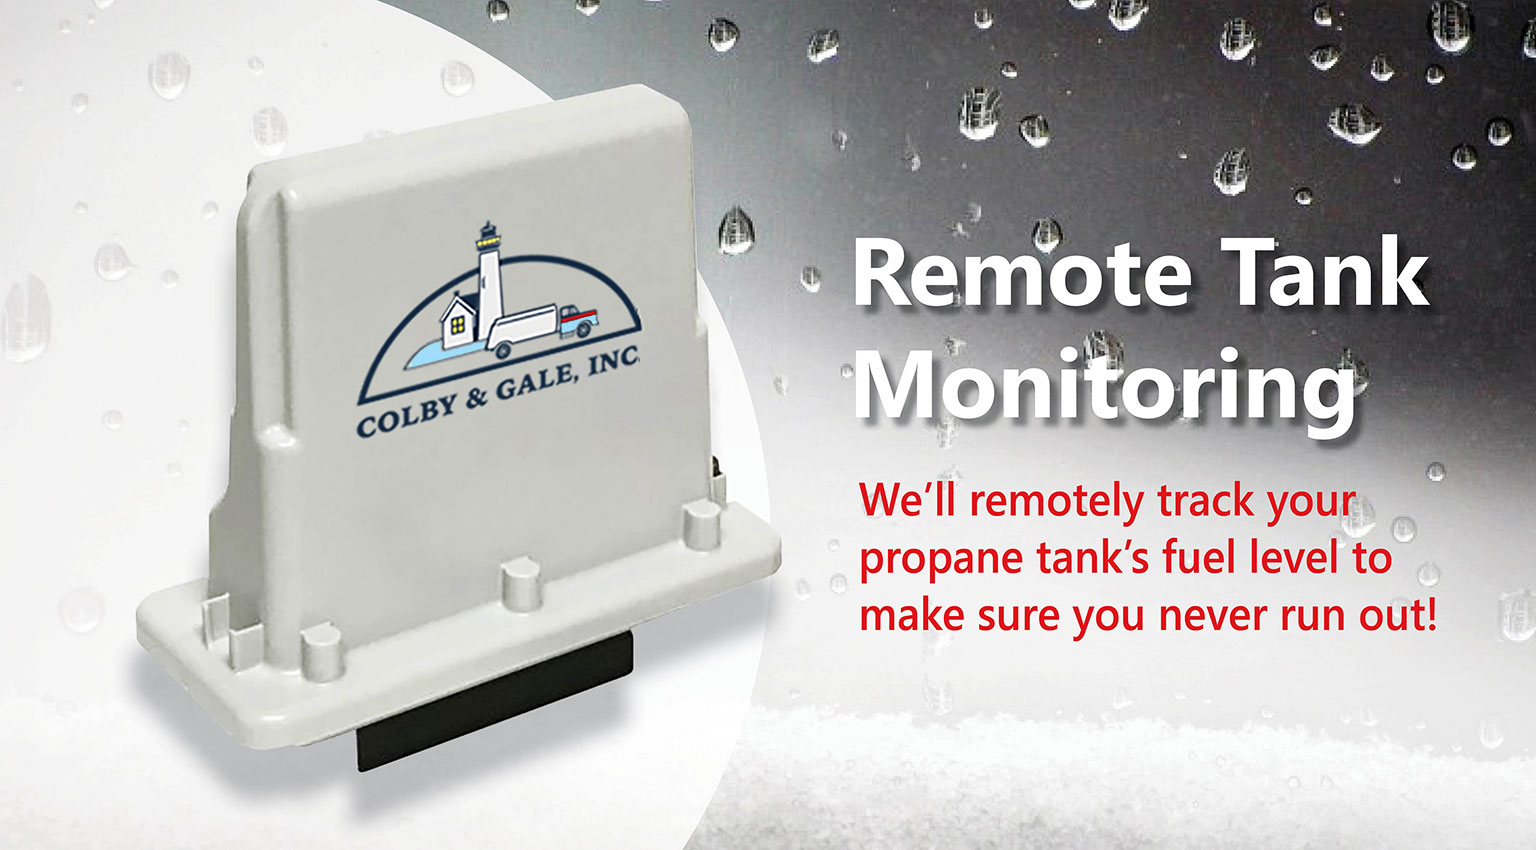 A wireless remote propane tank monitor sitting in snow and rain.